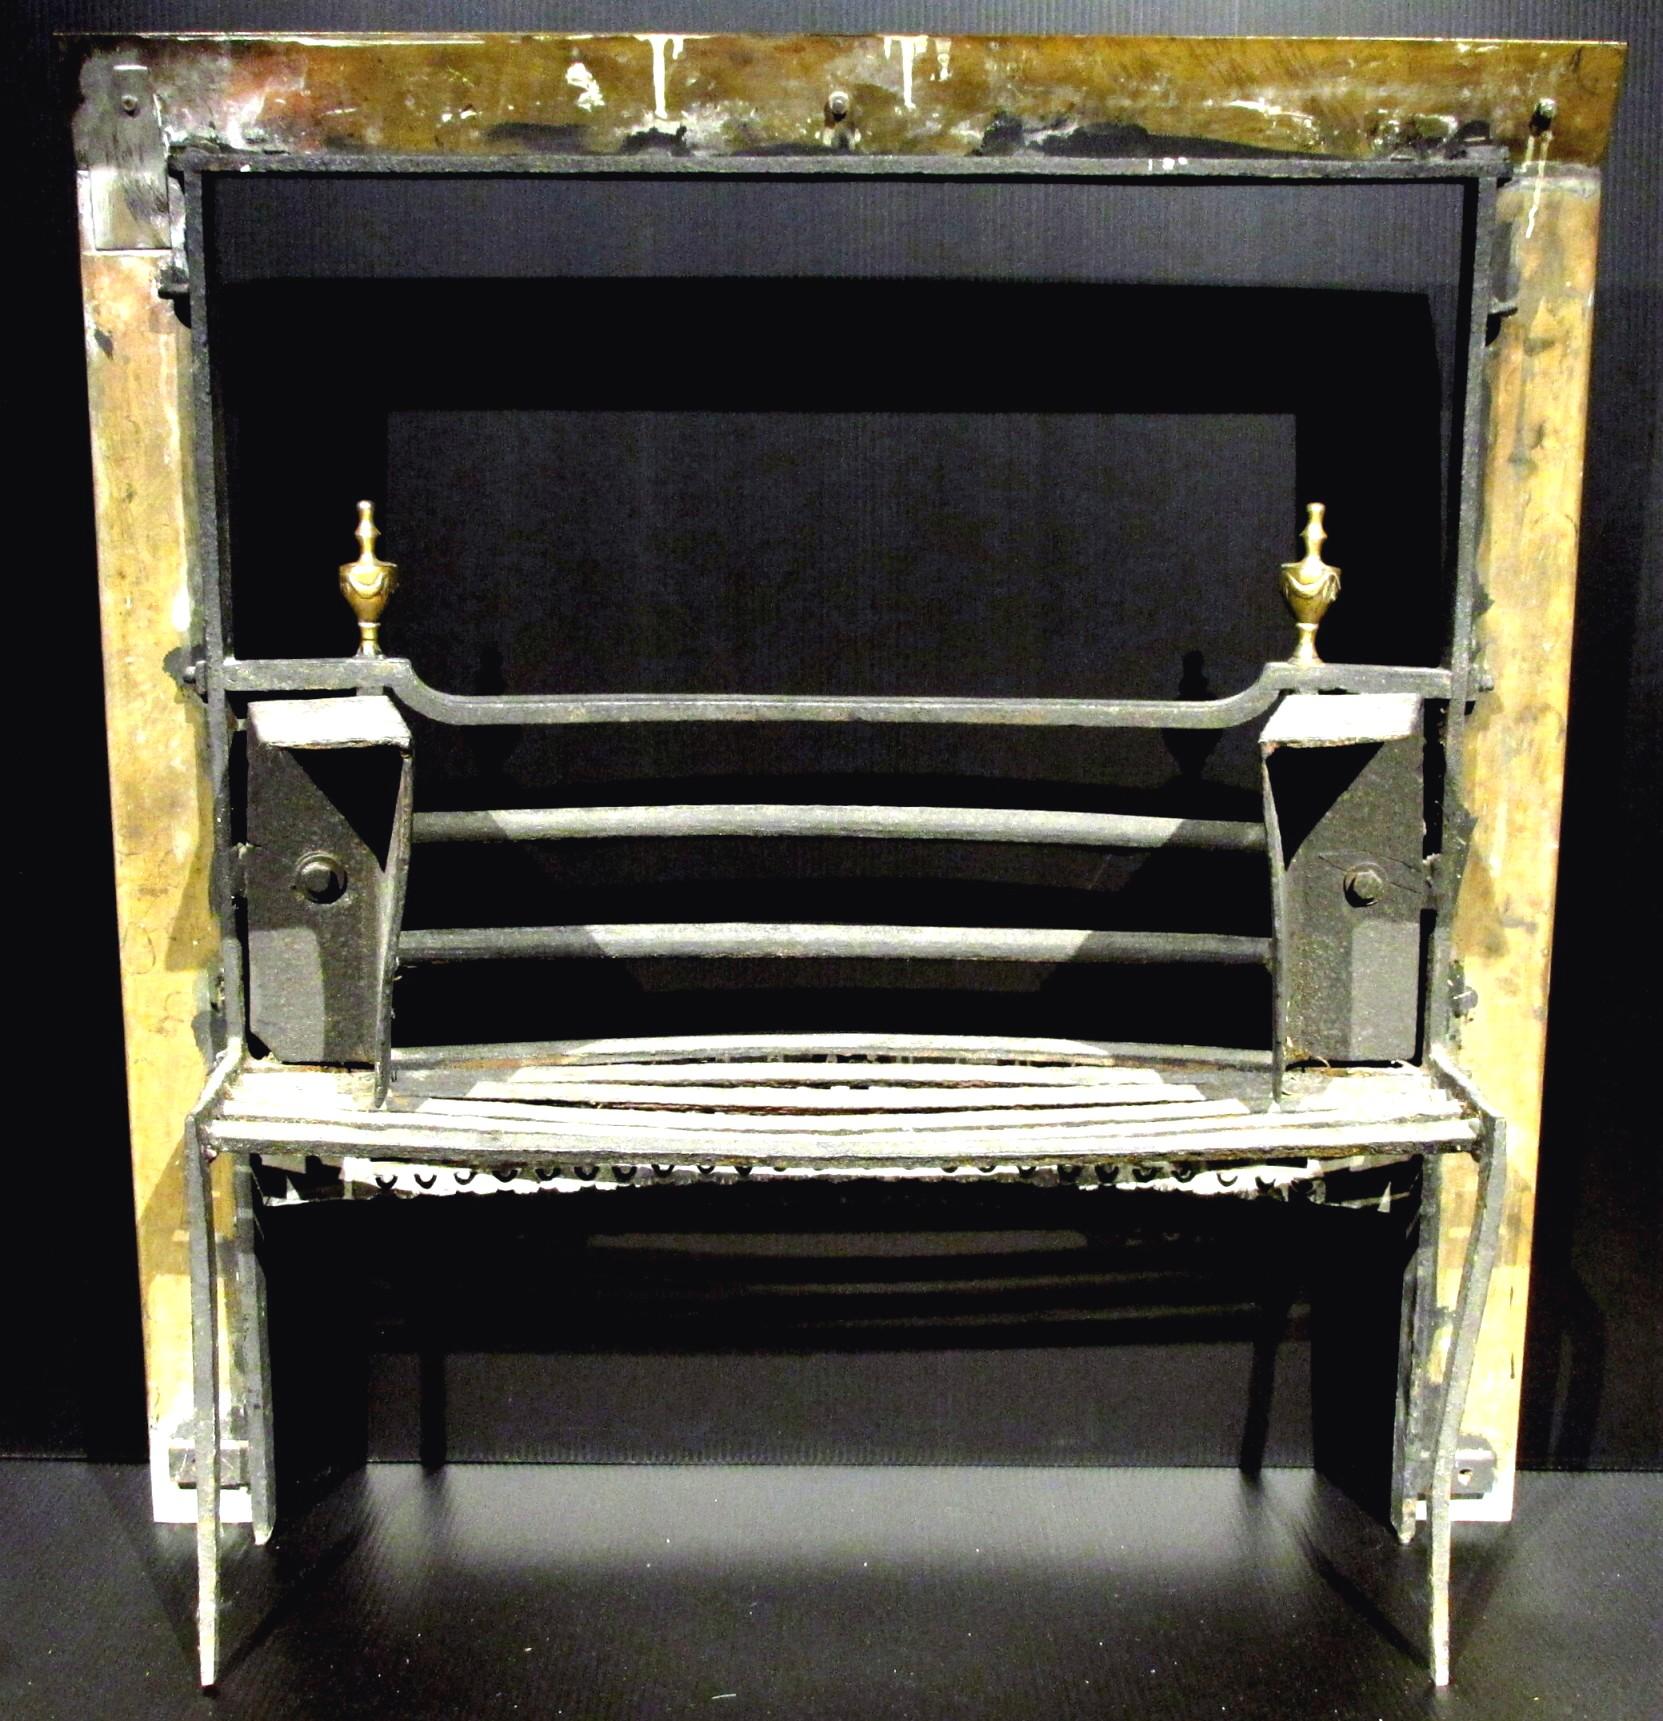 Forged A Very Fine 18th C. Irish Georgian Brass Fireplace Register Grate, Circa 1780 For Sale